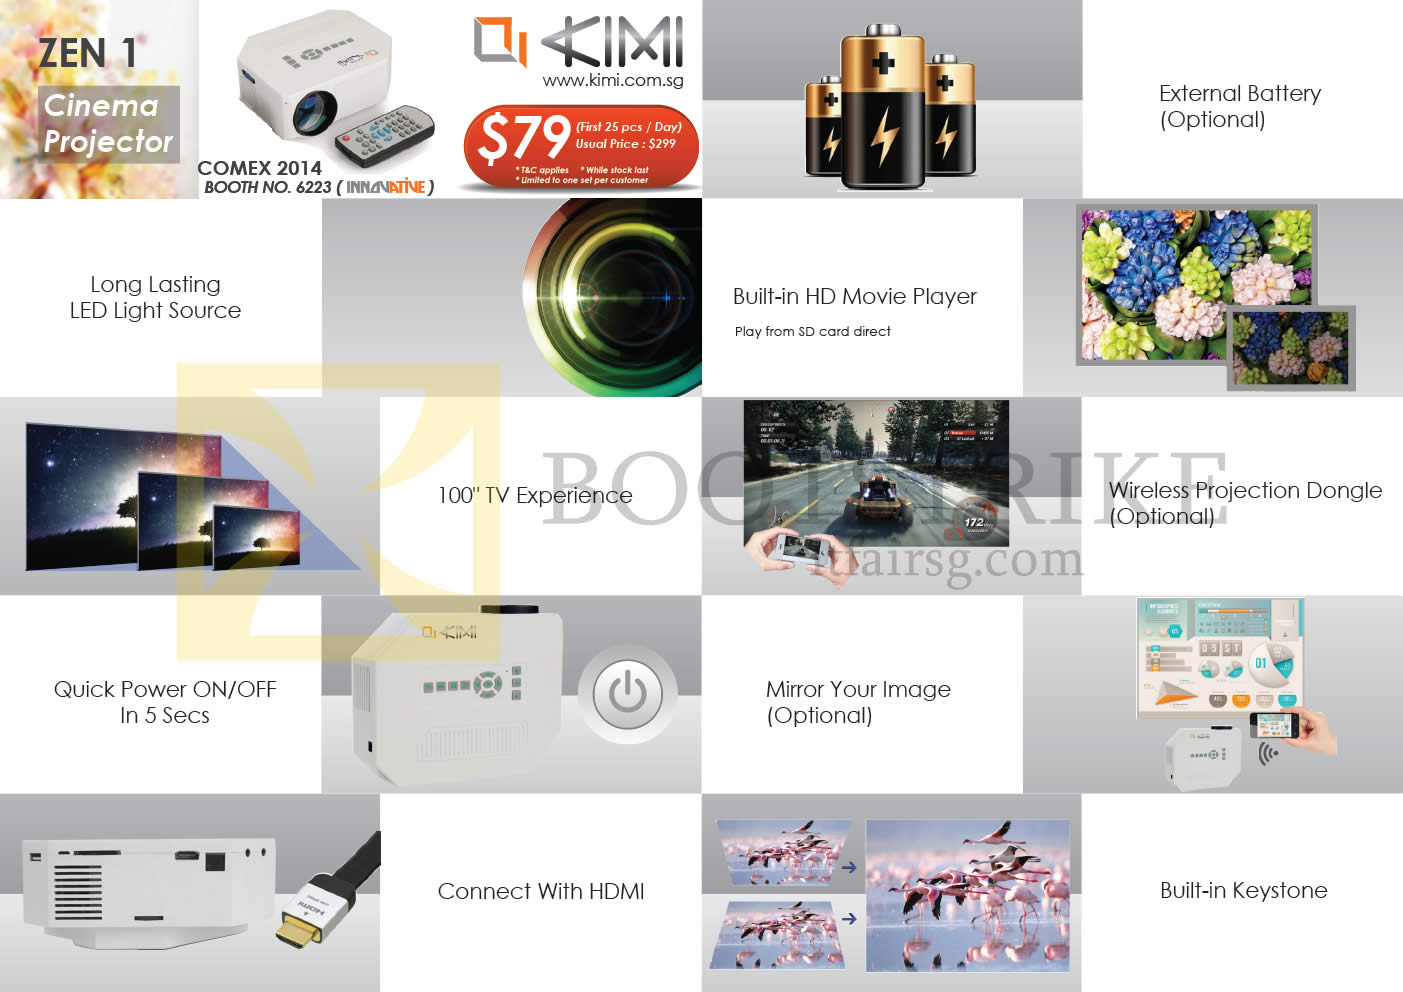 COMEX 2014 price list image brochure of Innovative Kimi Zen 1 Projector